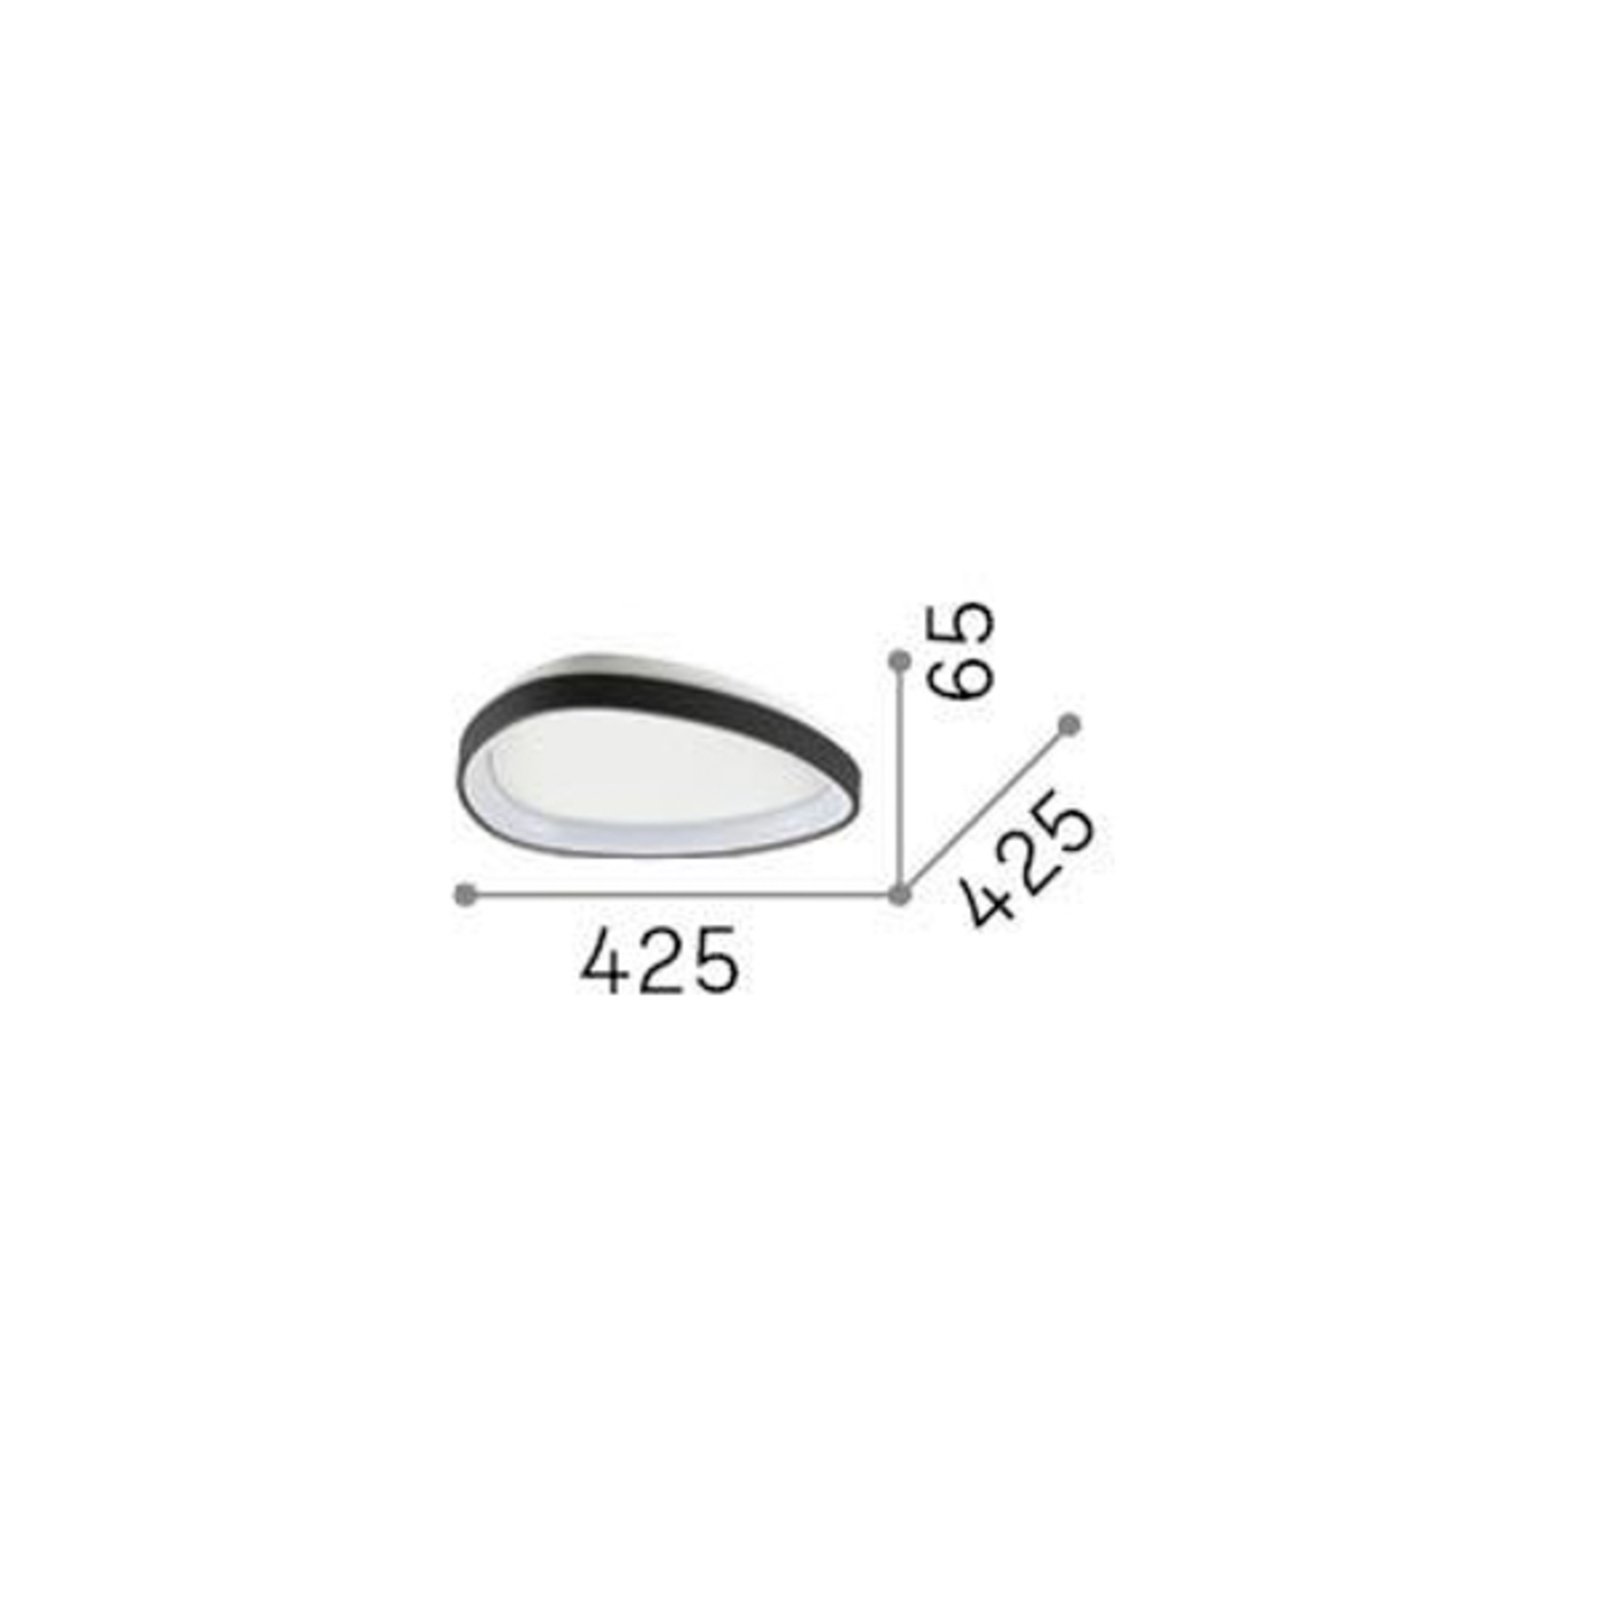 Ideal Lux Gemini LED stropné svetlo, biele, 42,5 cm, zapnuté/vypnuté